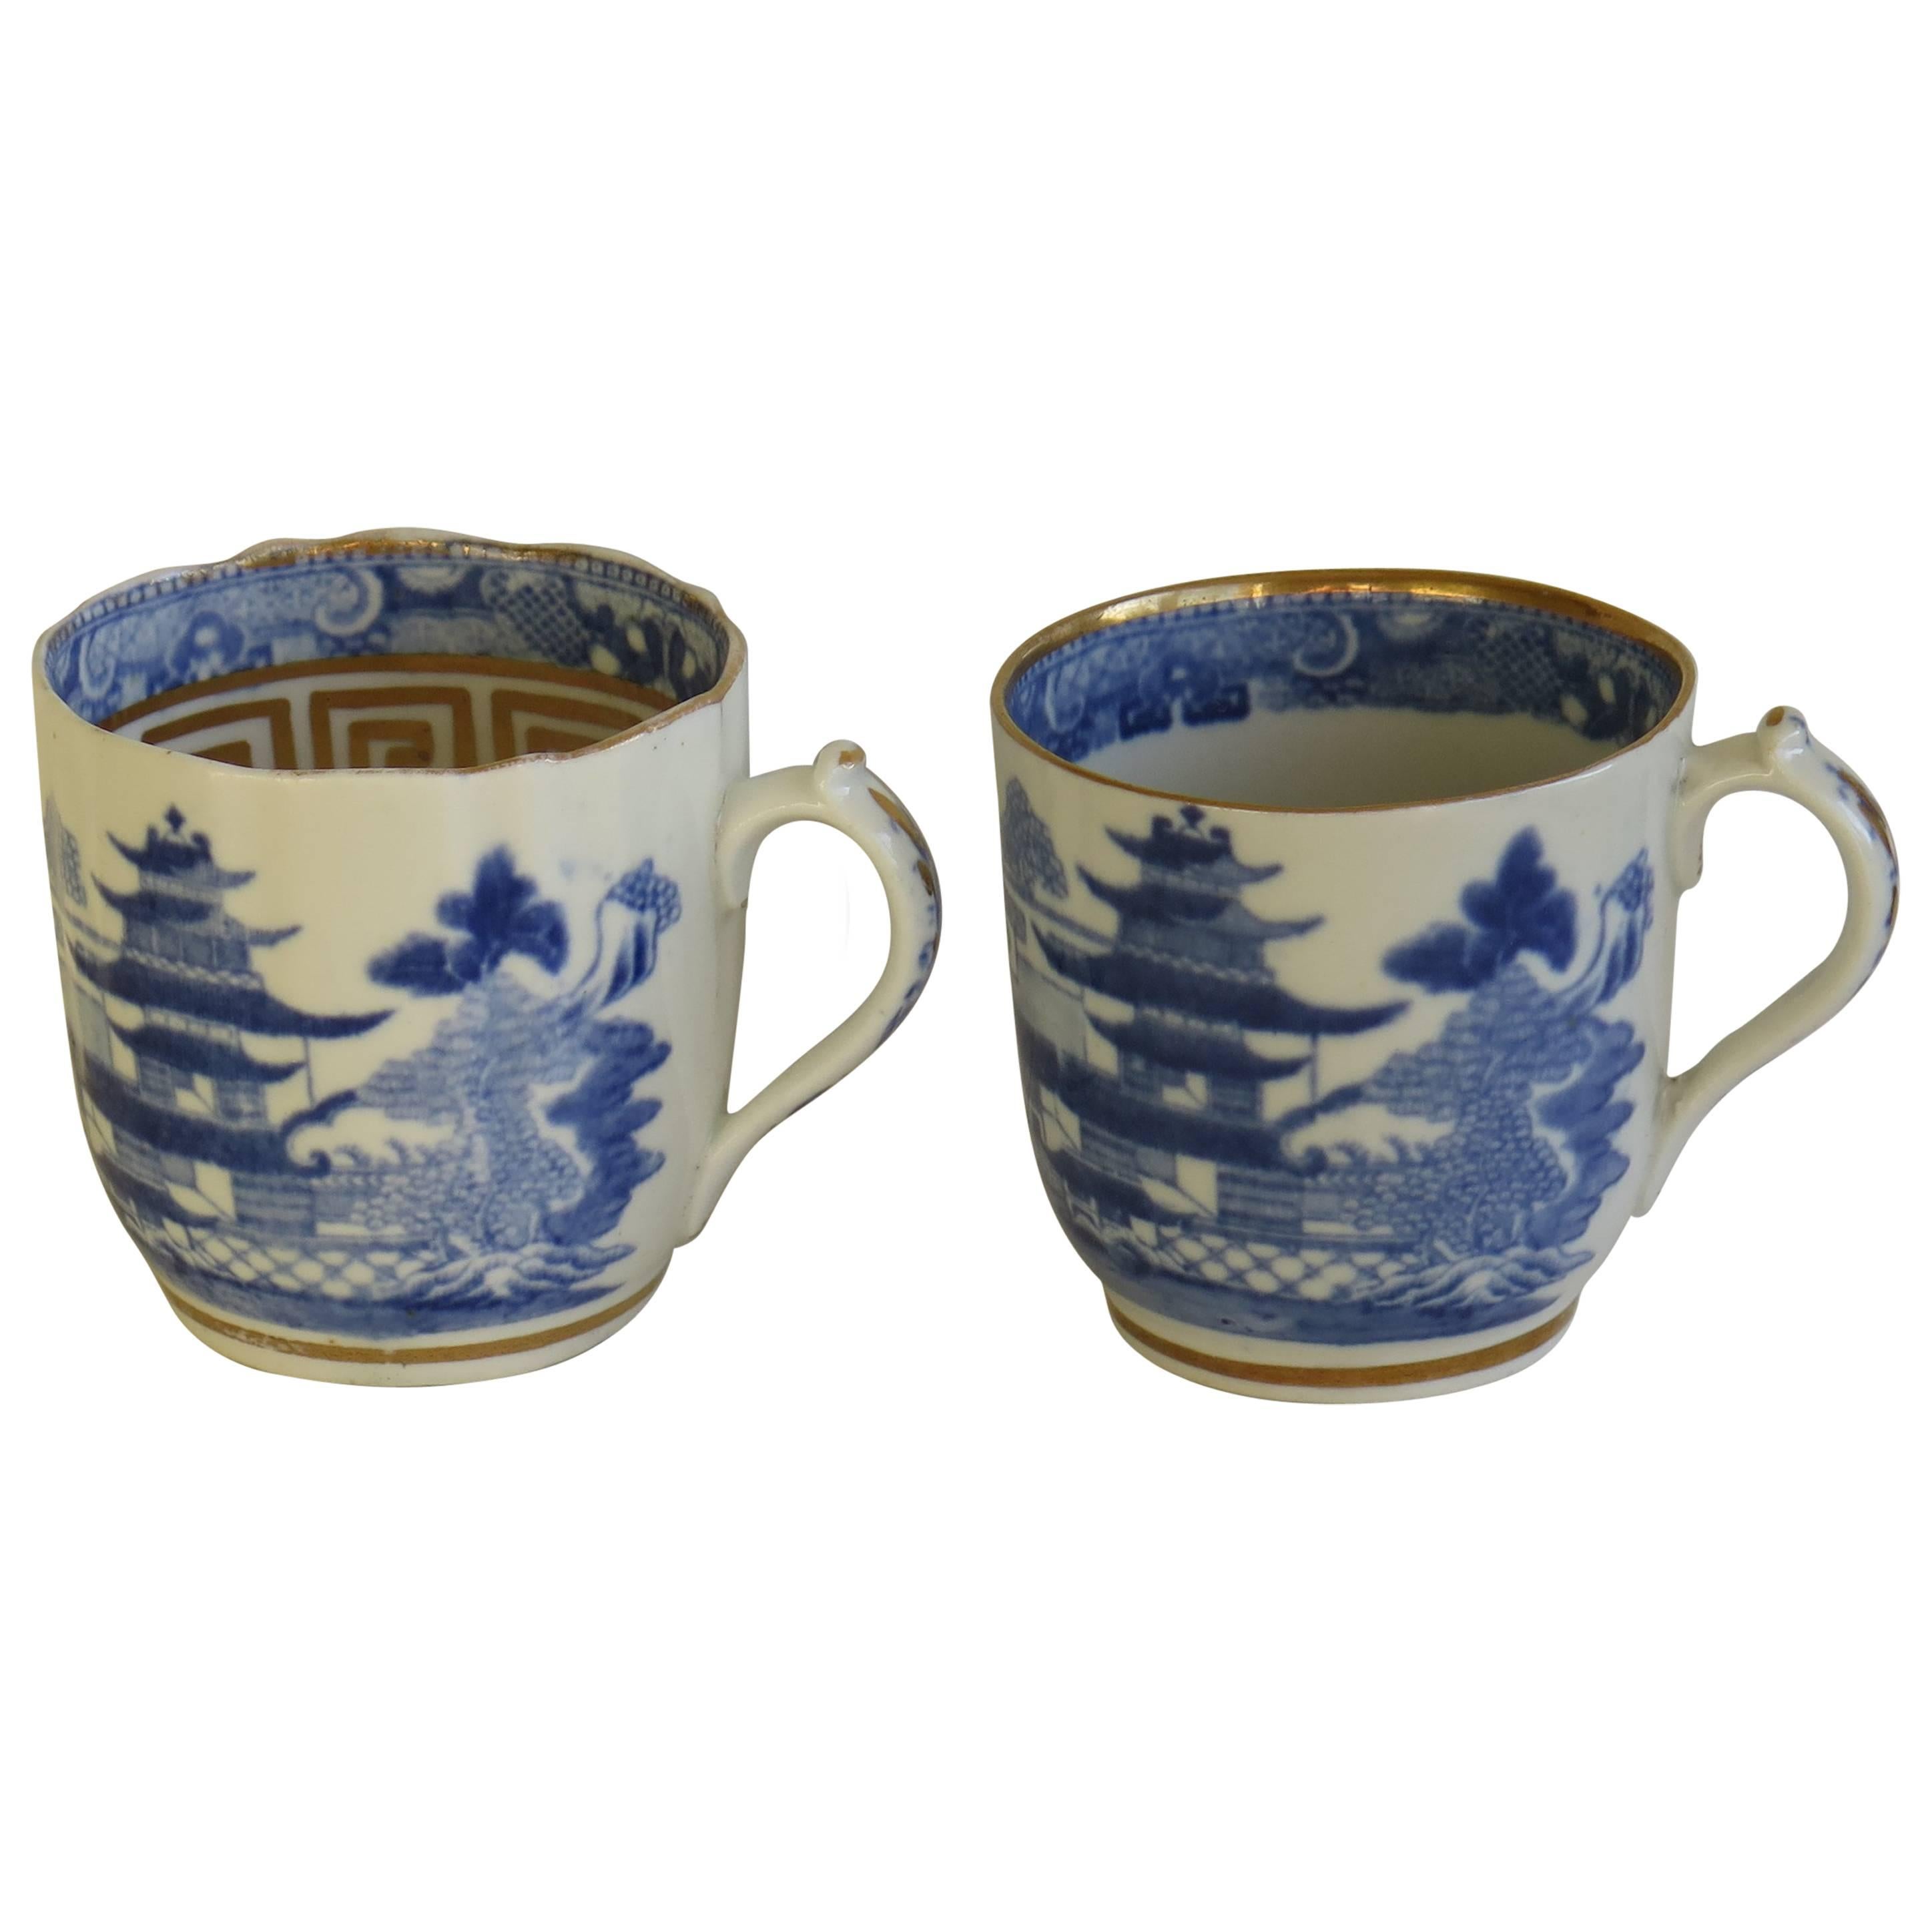 Similar PAIR of Miles Mason's Coffee Cans, Porcelain, Pagoda Pattern, circa 1800